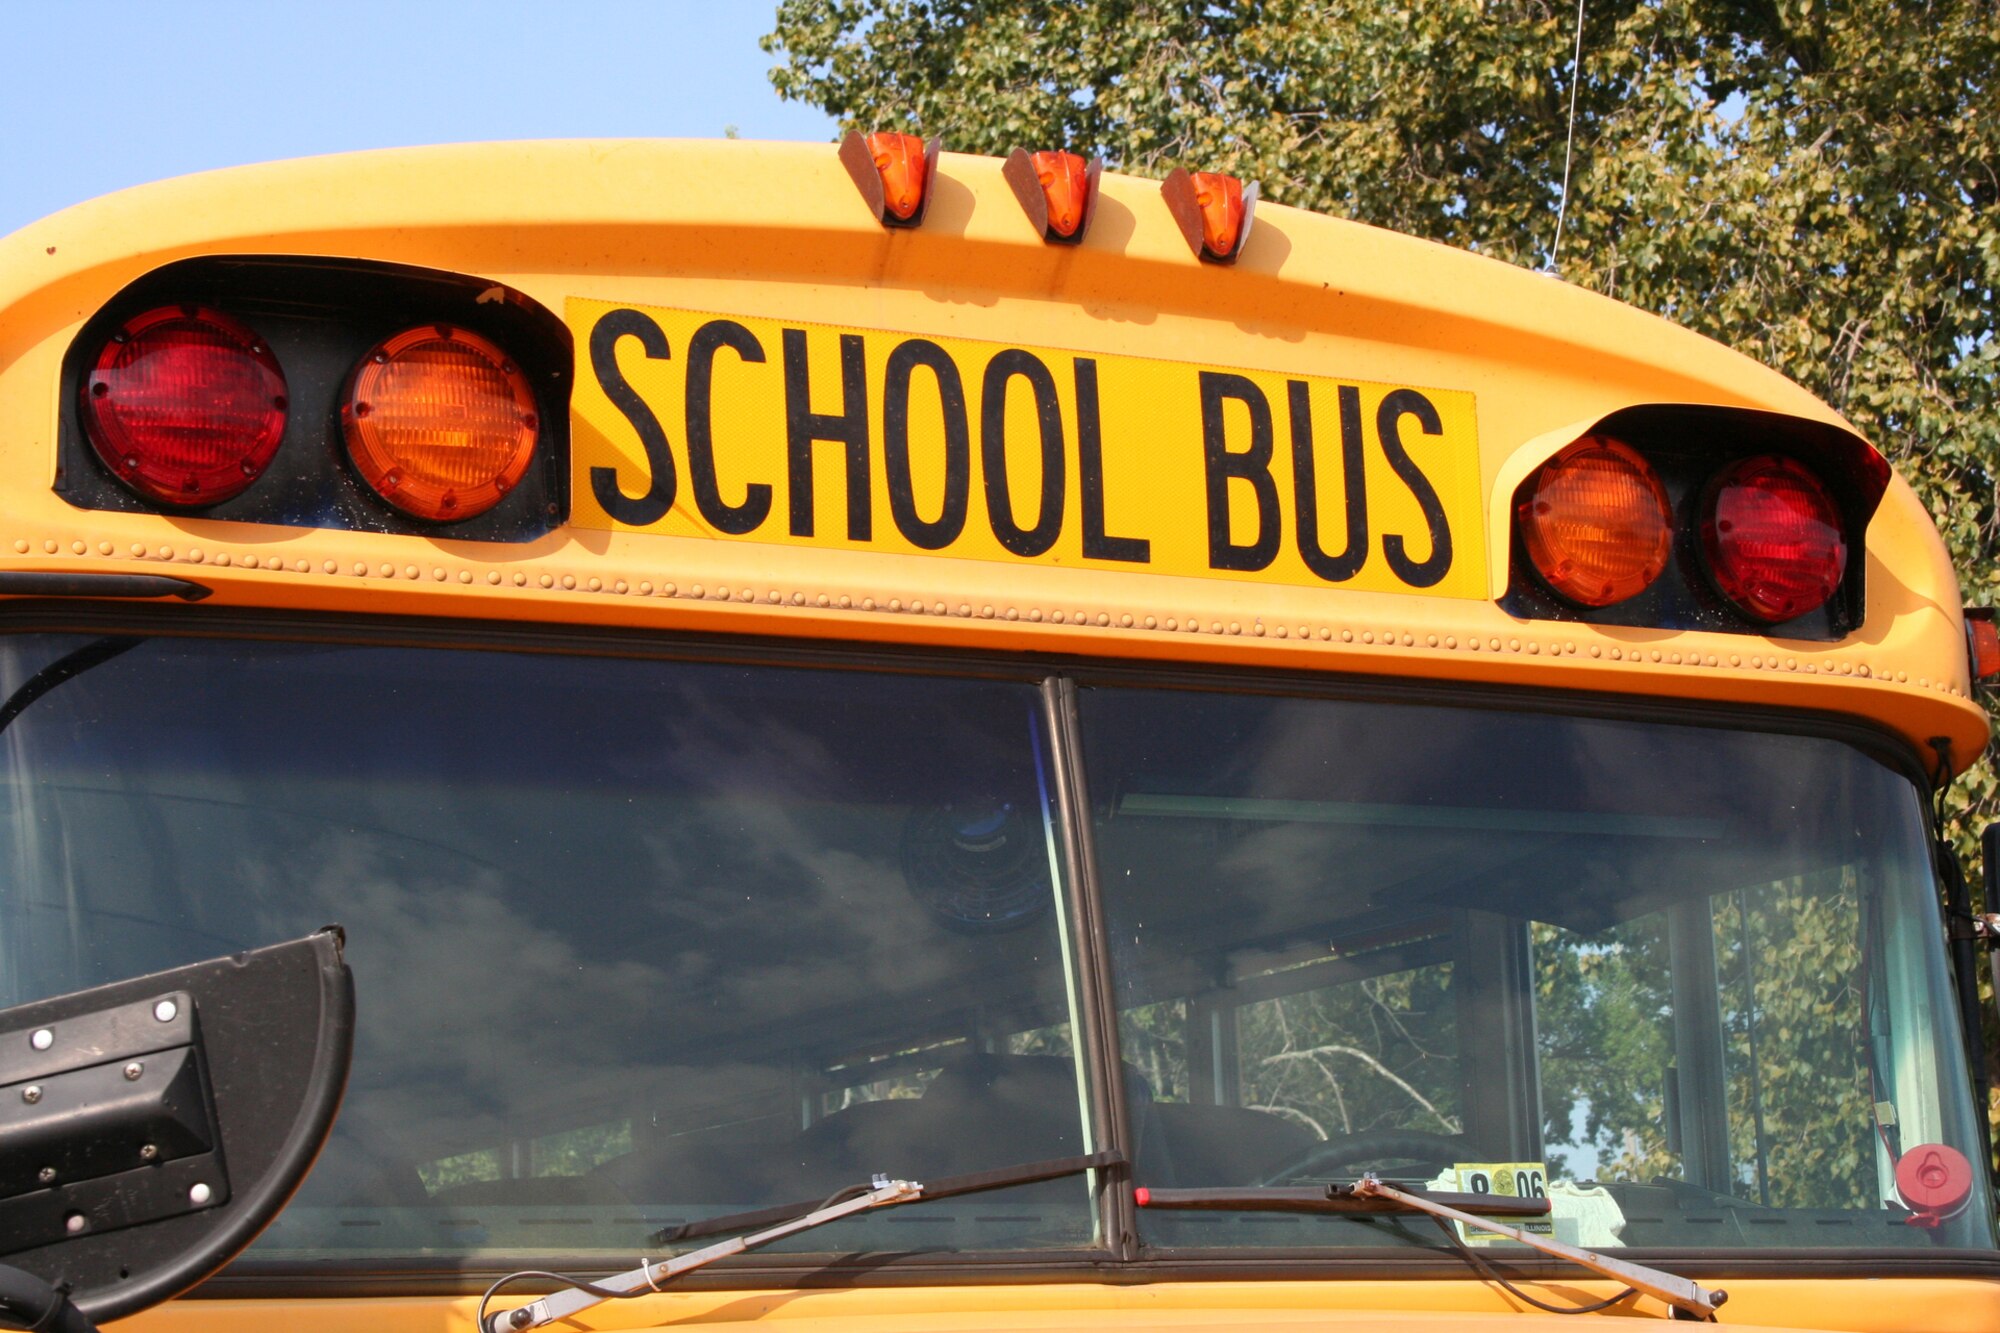 Generic school bus photo